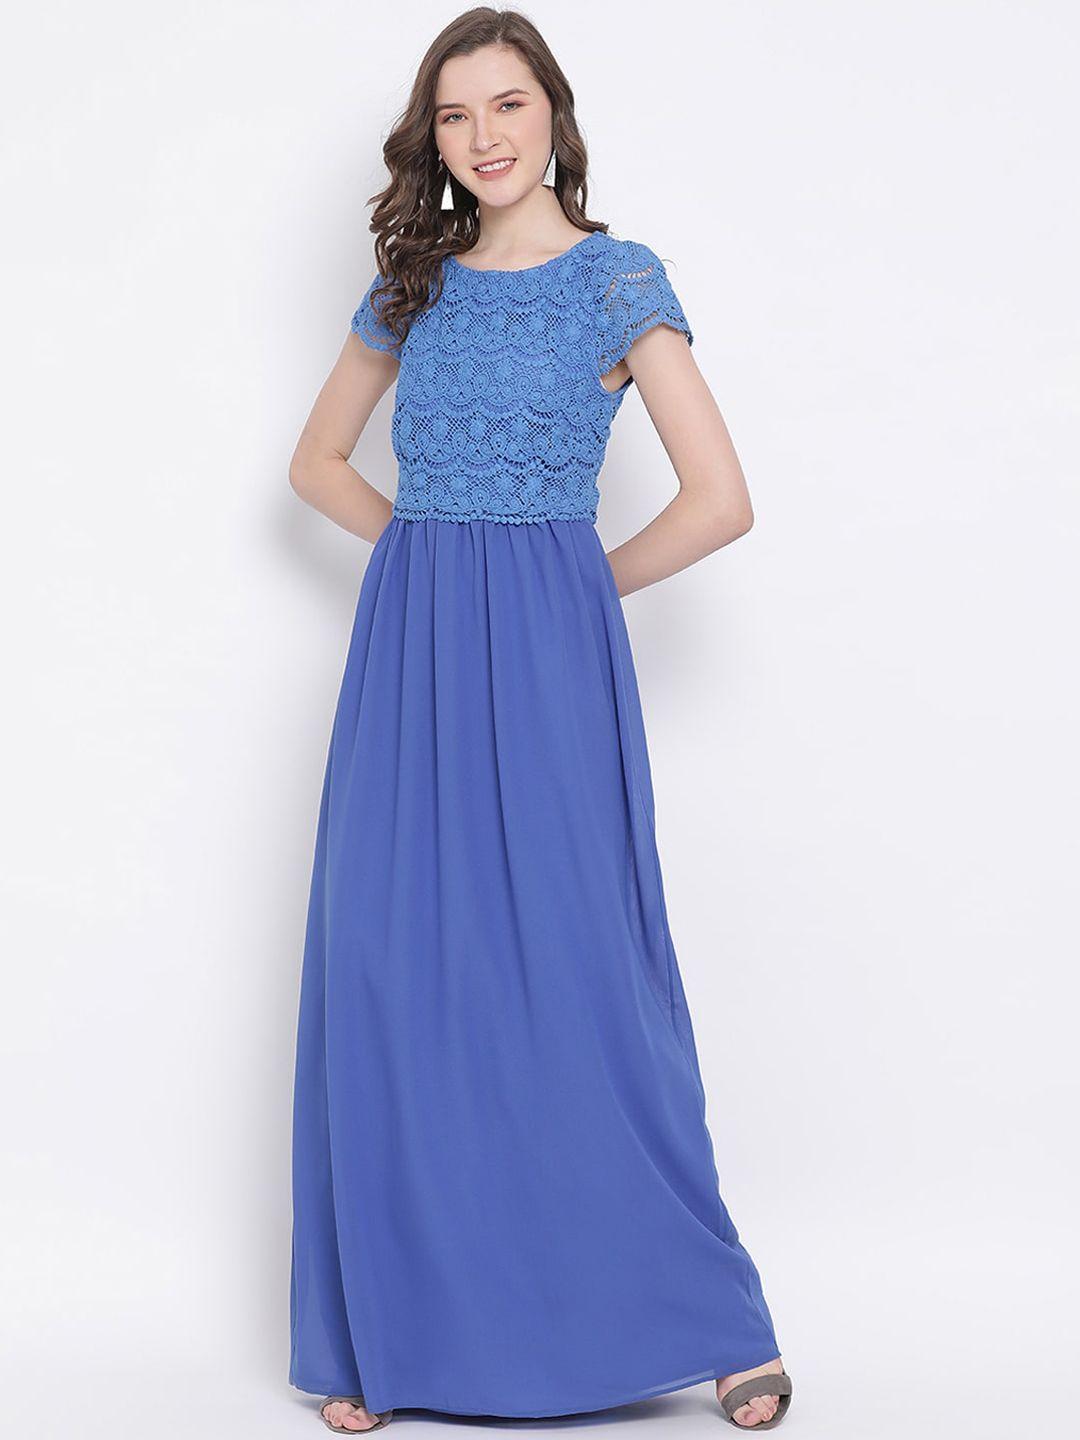 ly2-blue-lace-maxi-dress